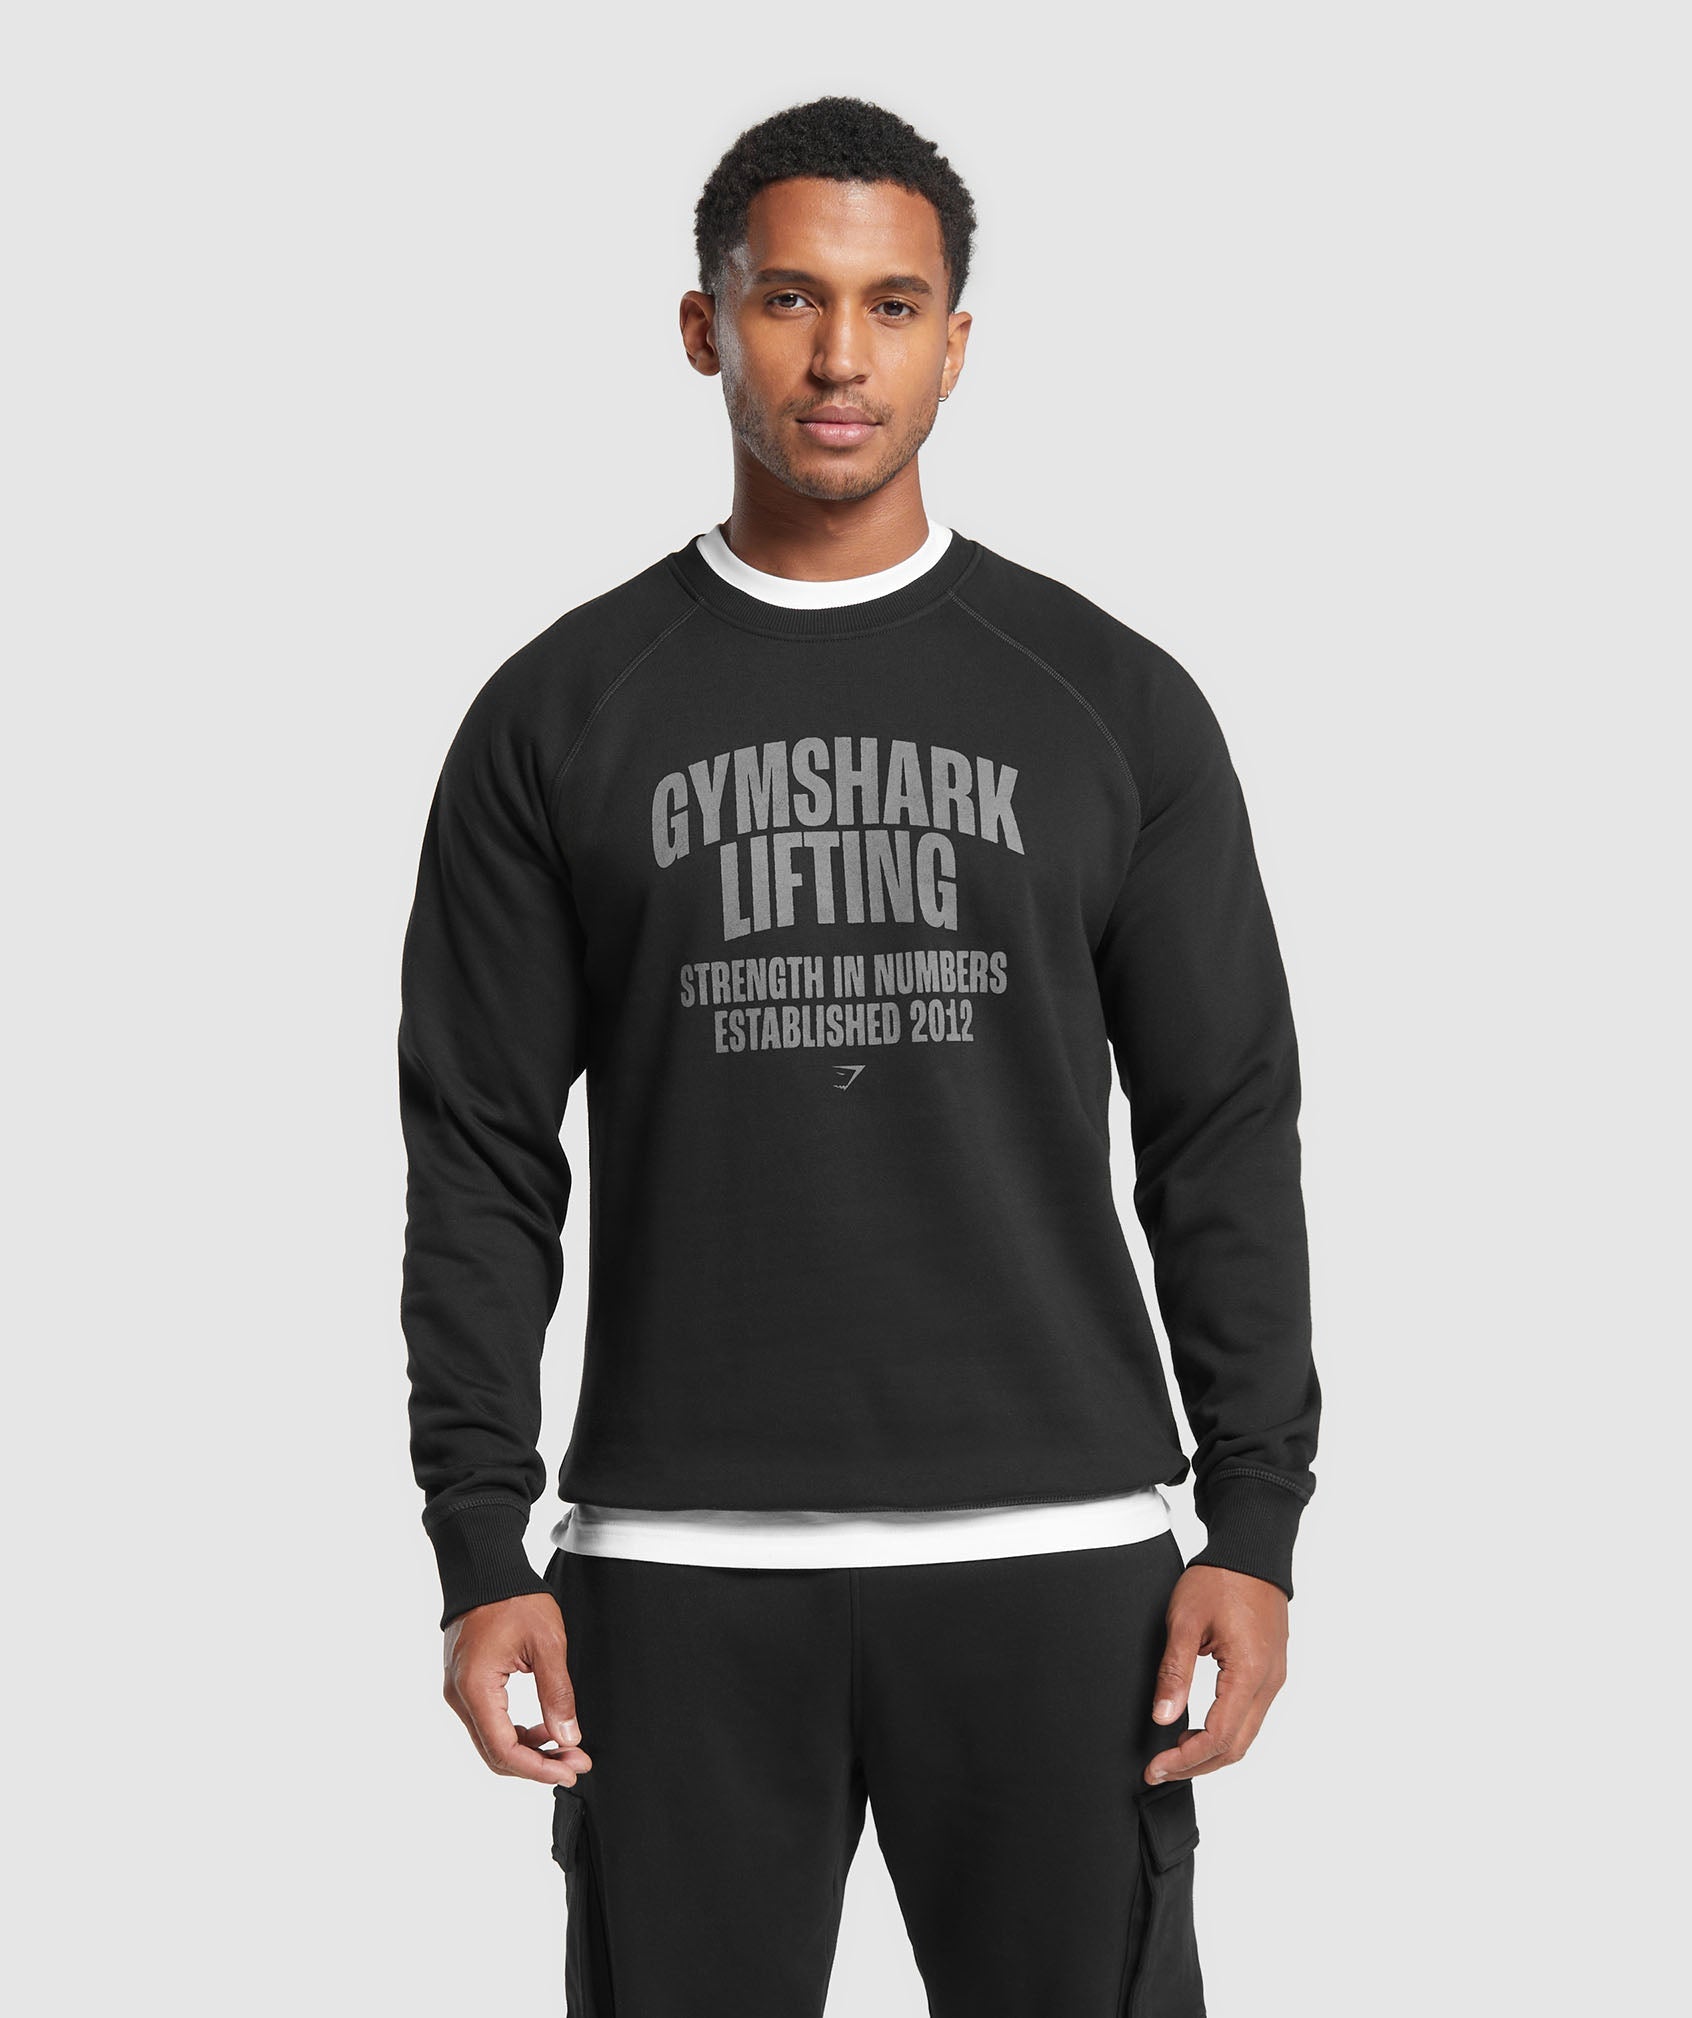 Gymshark Lifting Lightweight Joggers - Black